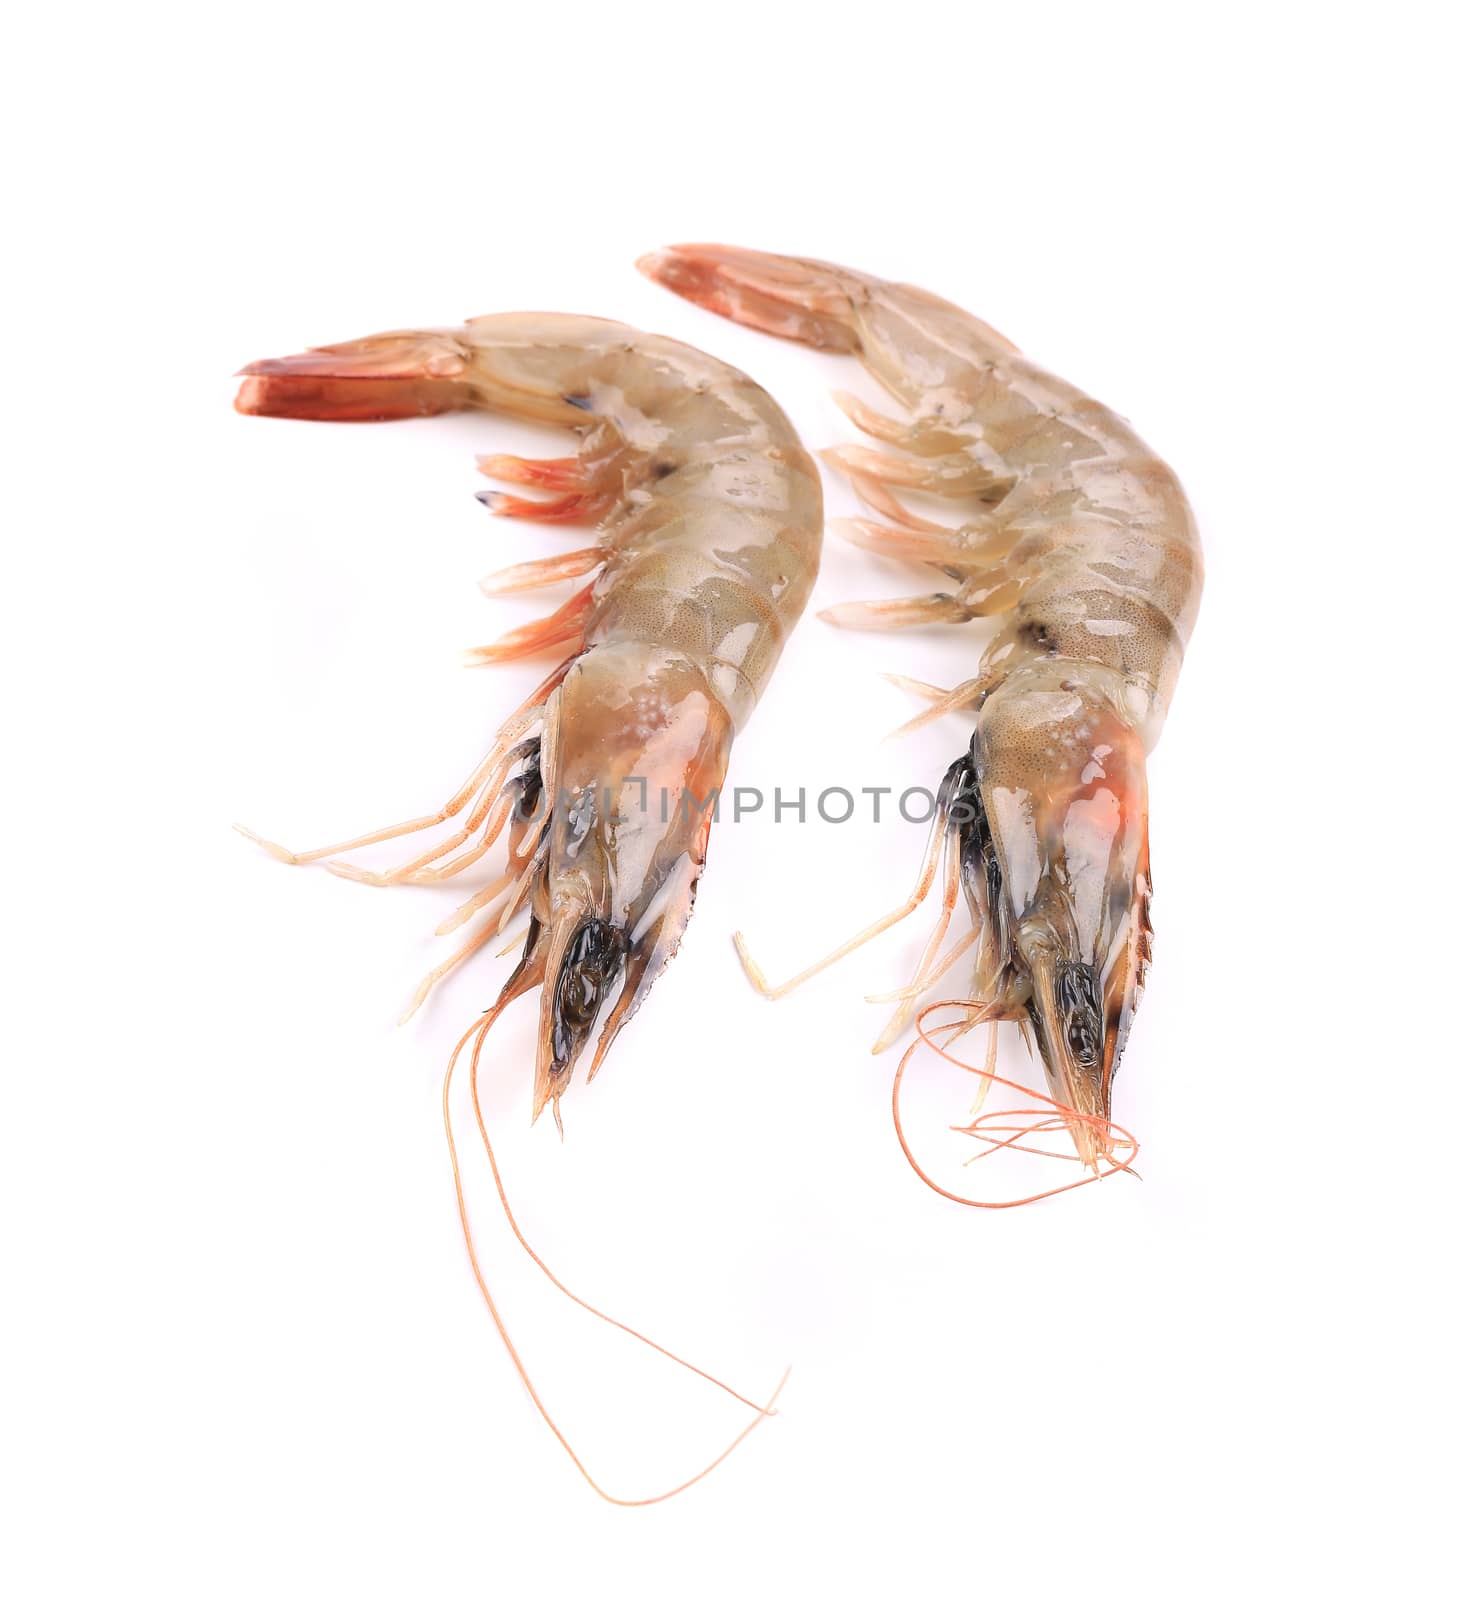 Close up of fresh shrimps. Isolated on a white background